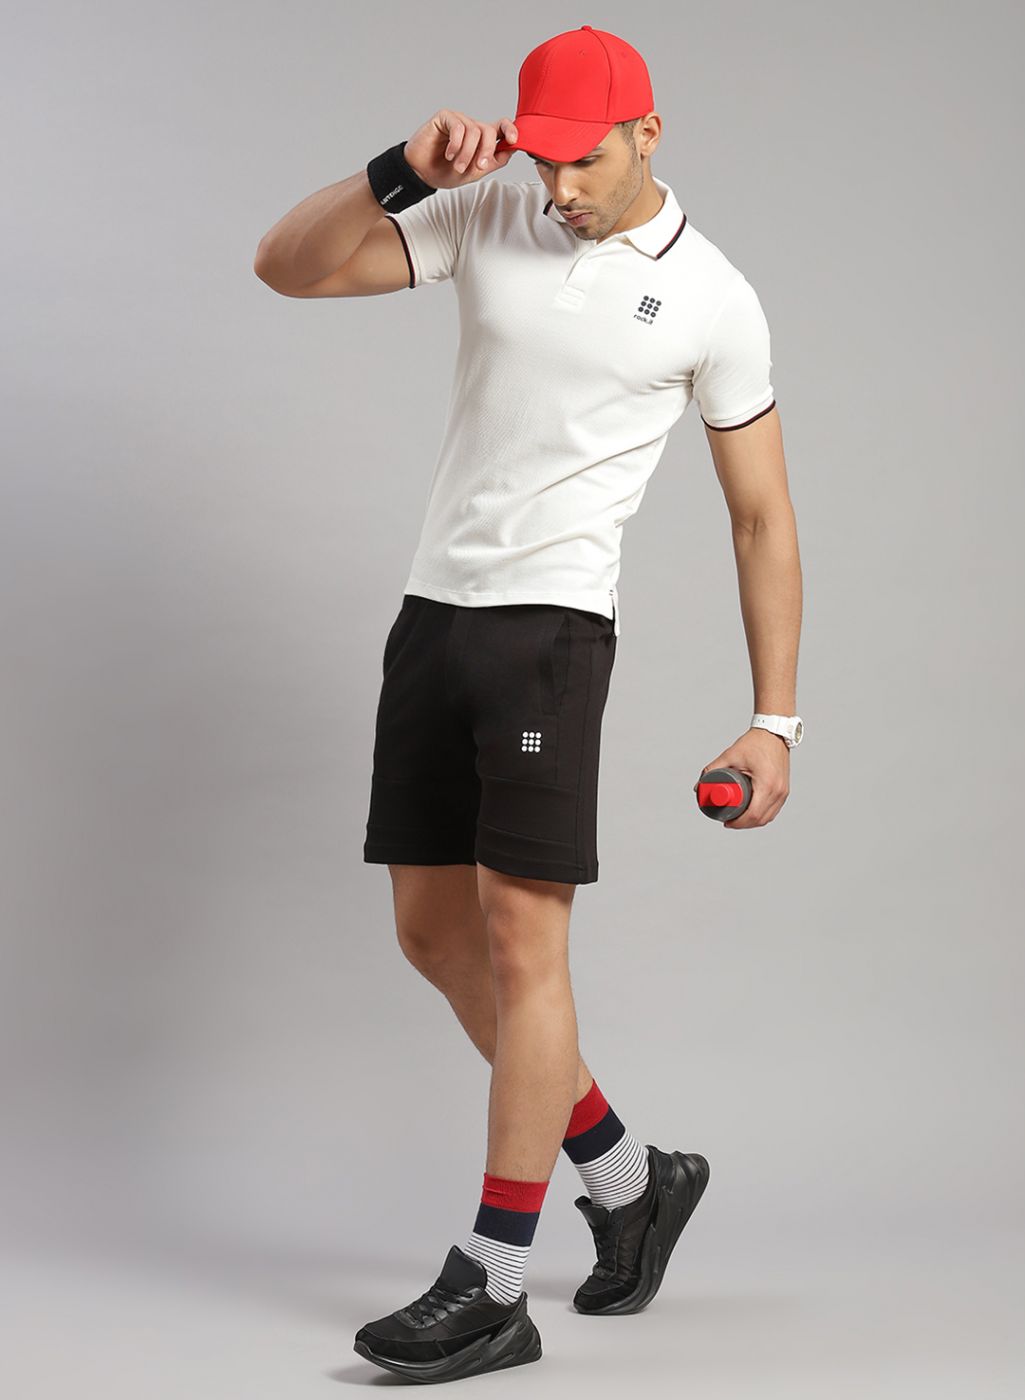 Buy Activewear Shorts For Men Online in India - Monte Carlo